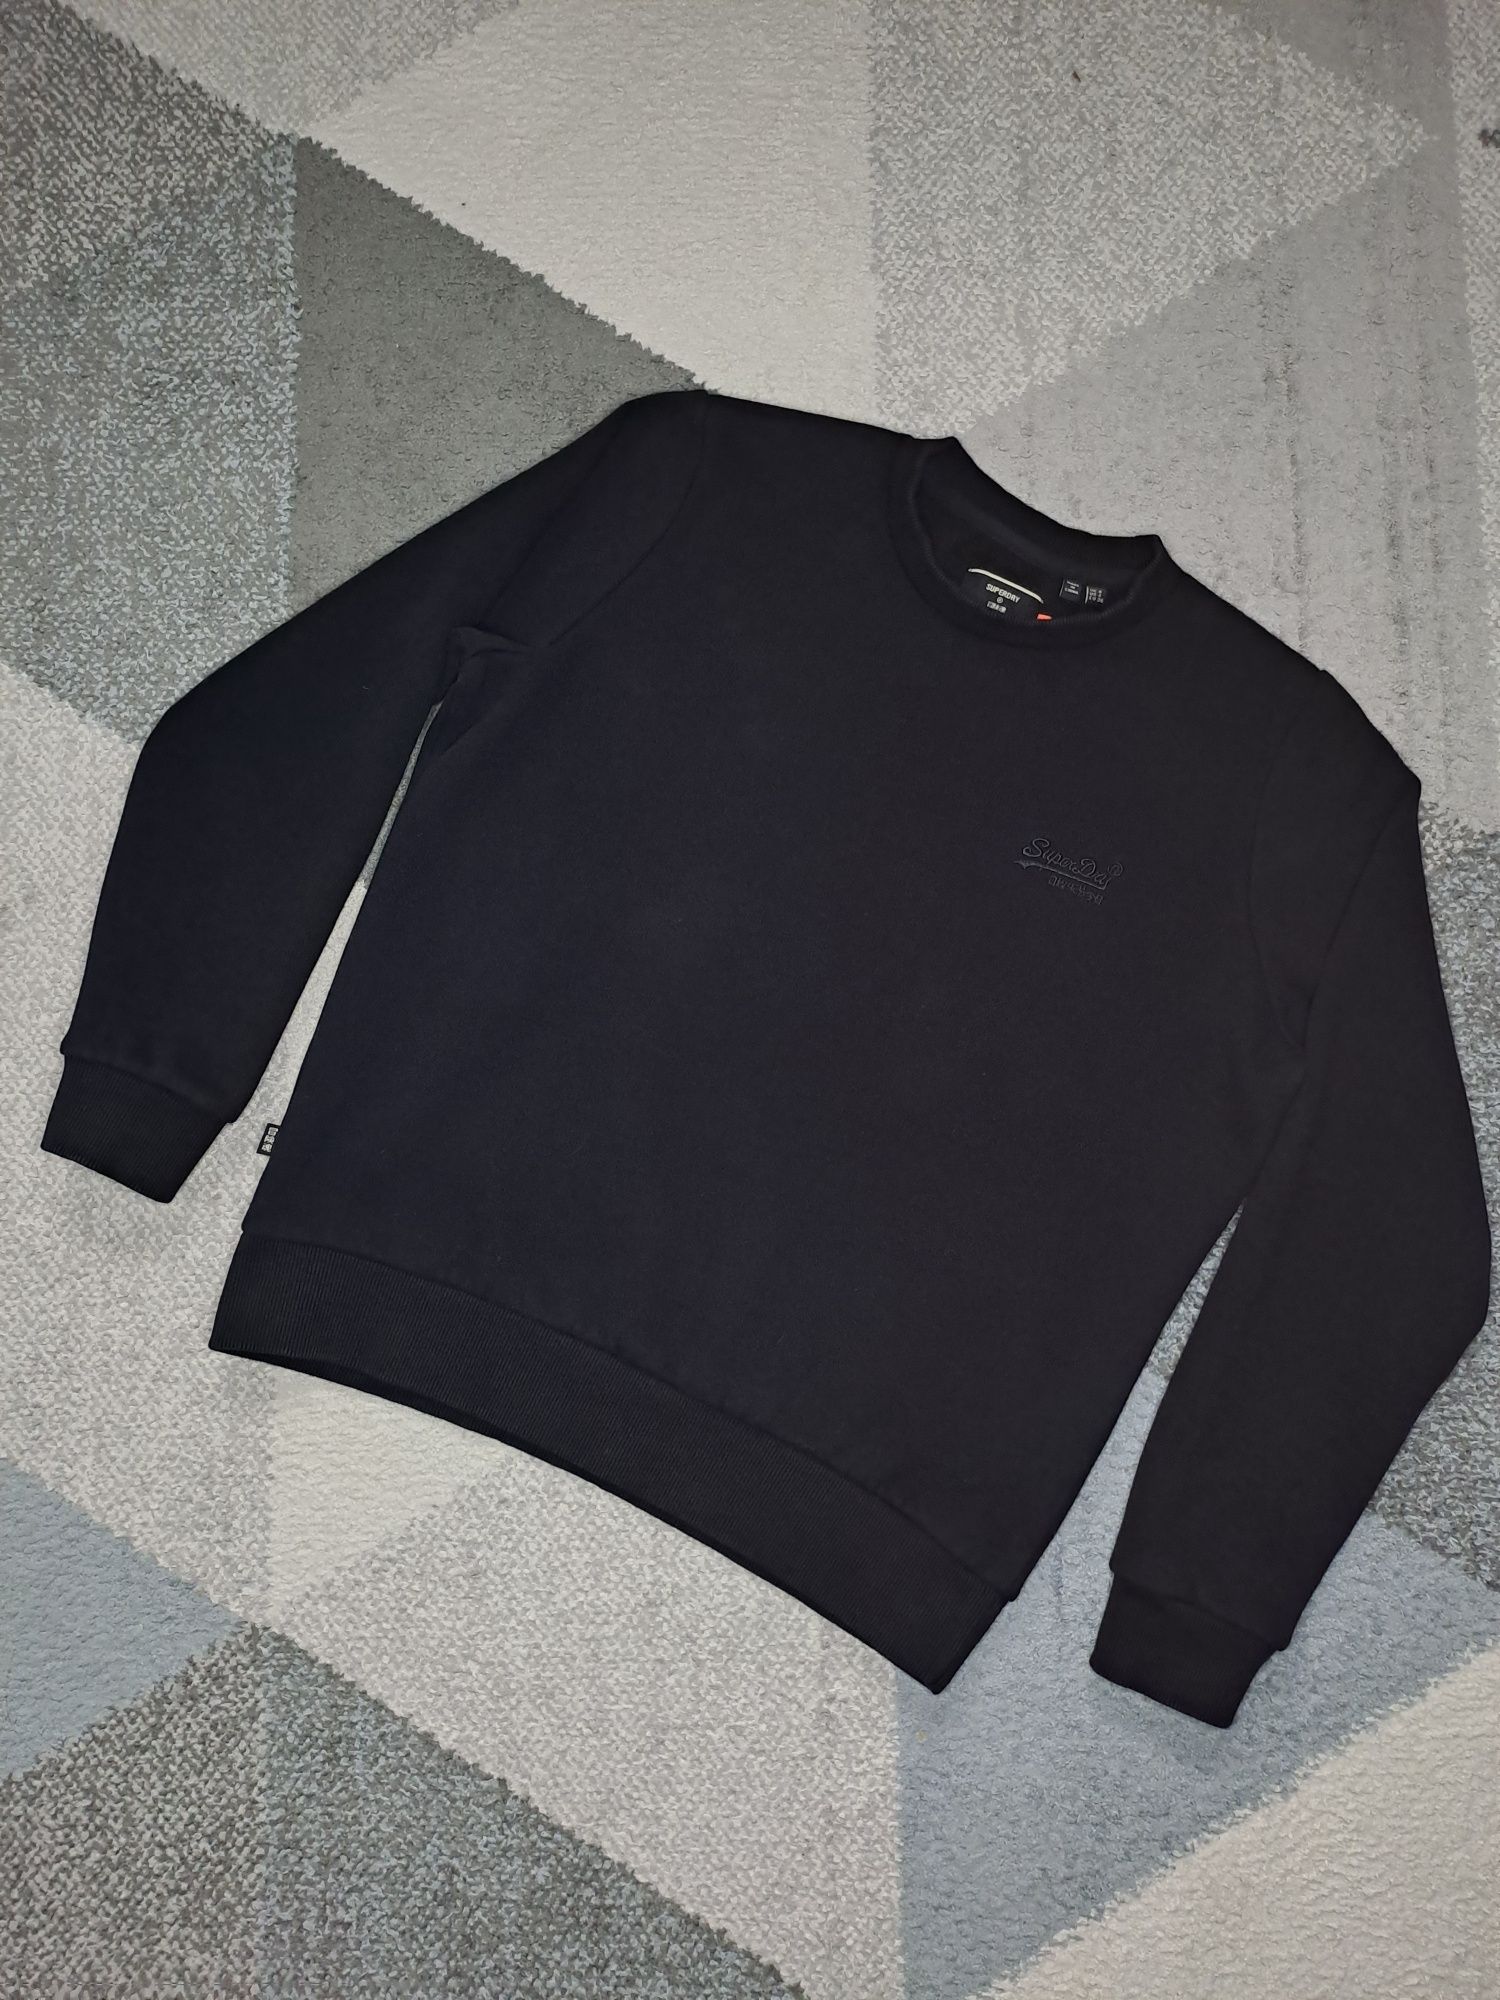 Czarna bawełniana bluza pullover marki Superdry